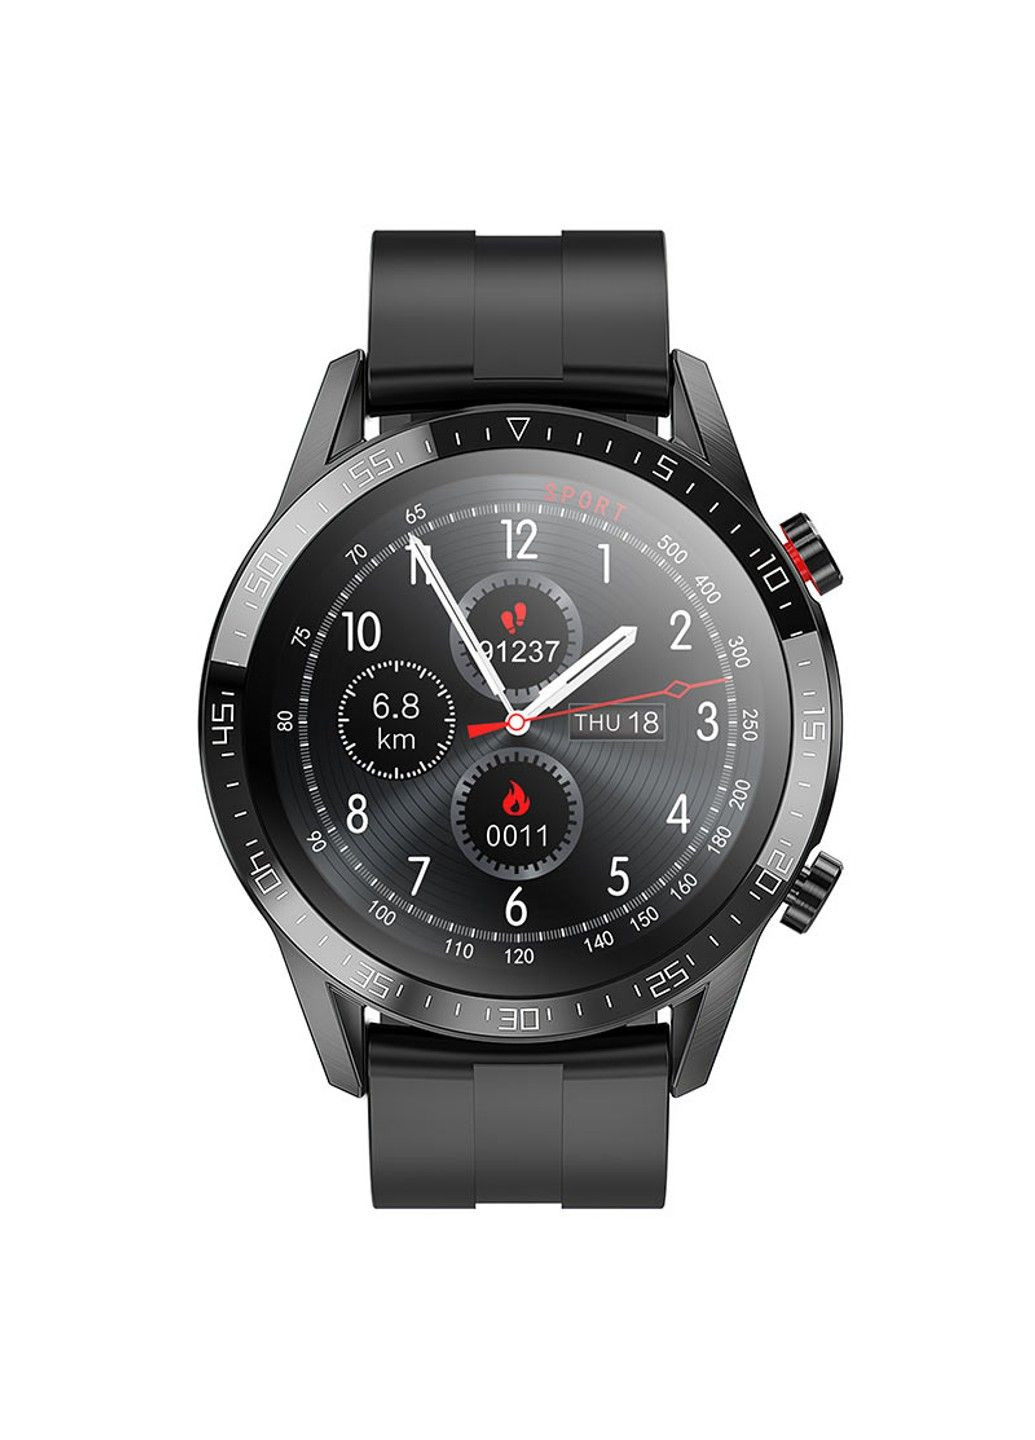 Смарт-часы Y2 Pro TFT black Hoco (282742444)